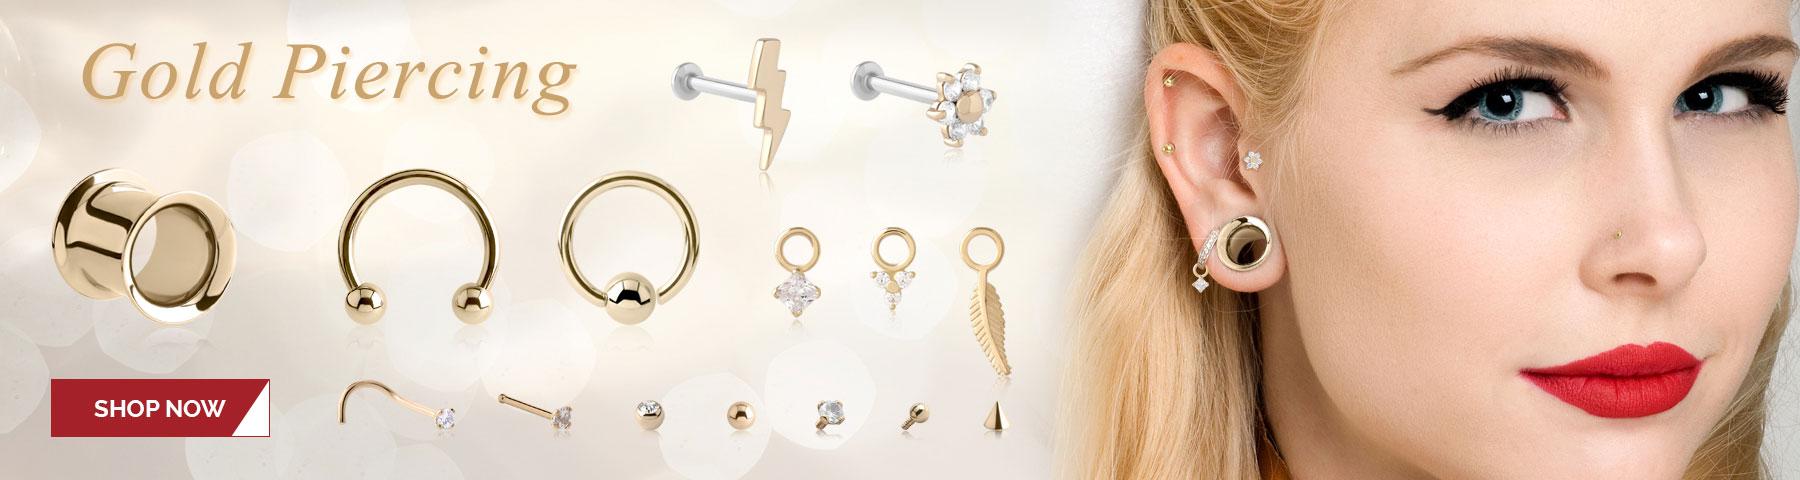 Gold piercings: Shop our exquisite gold piercings